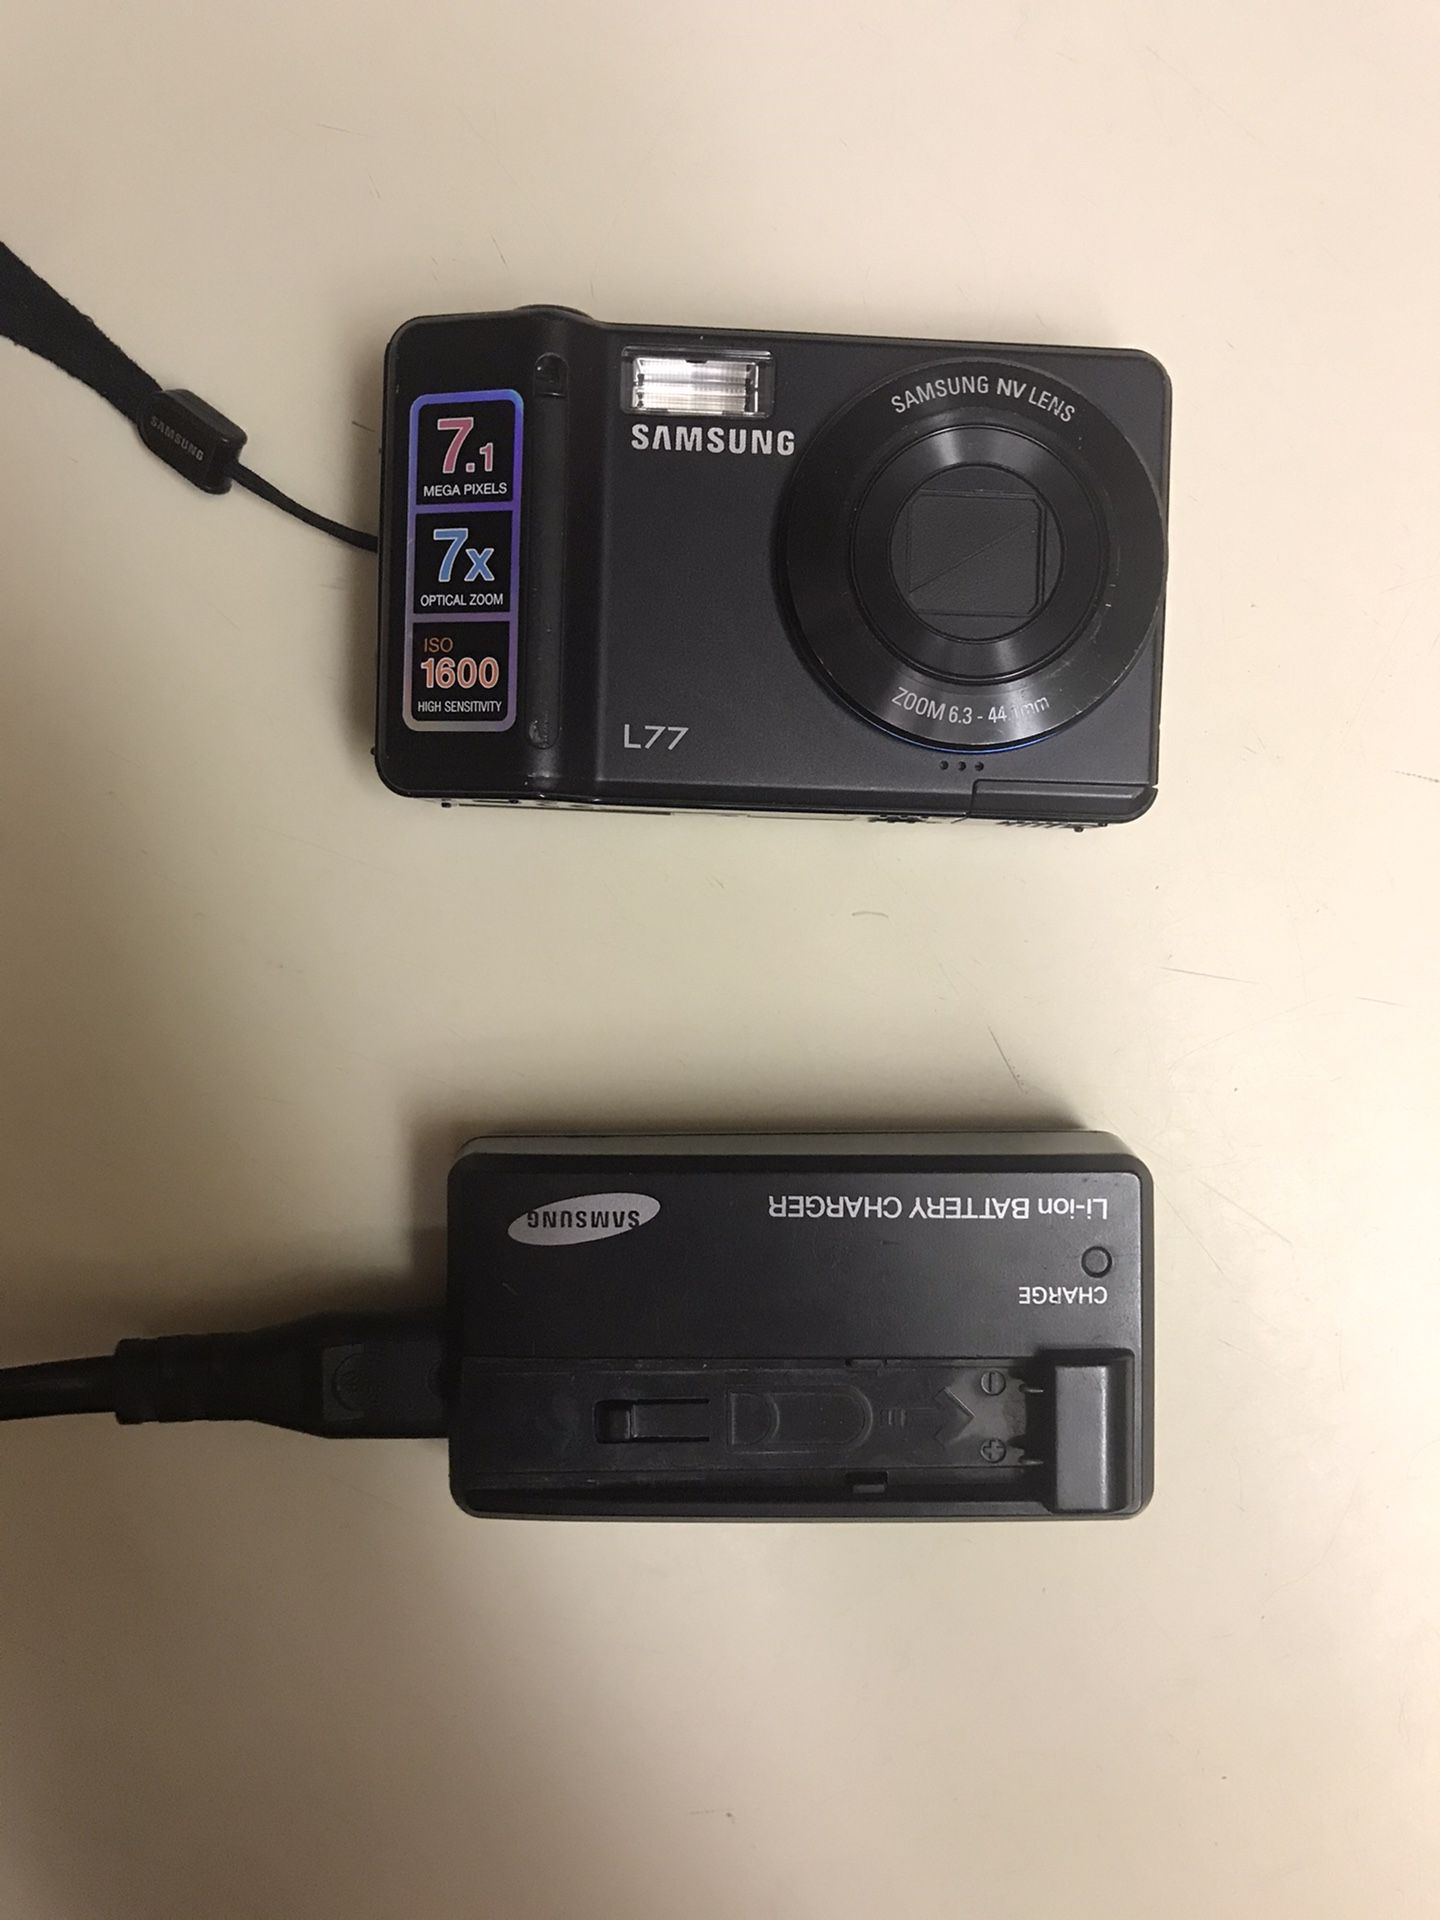 Samsung L77 digital camera